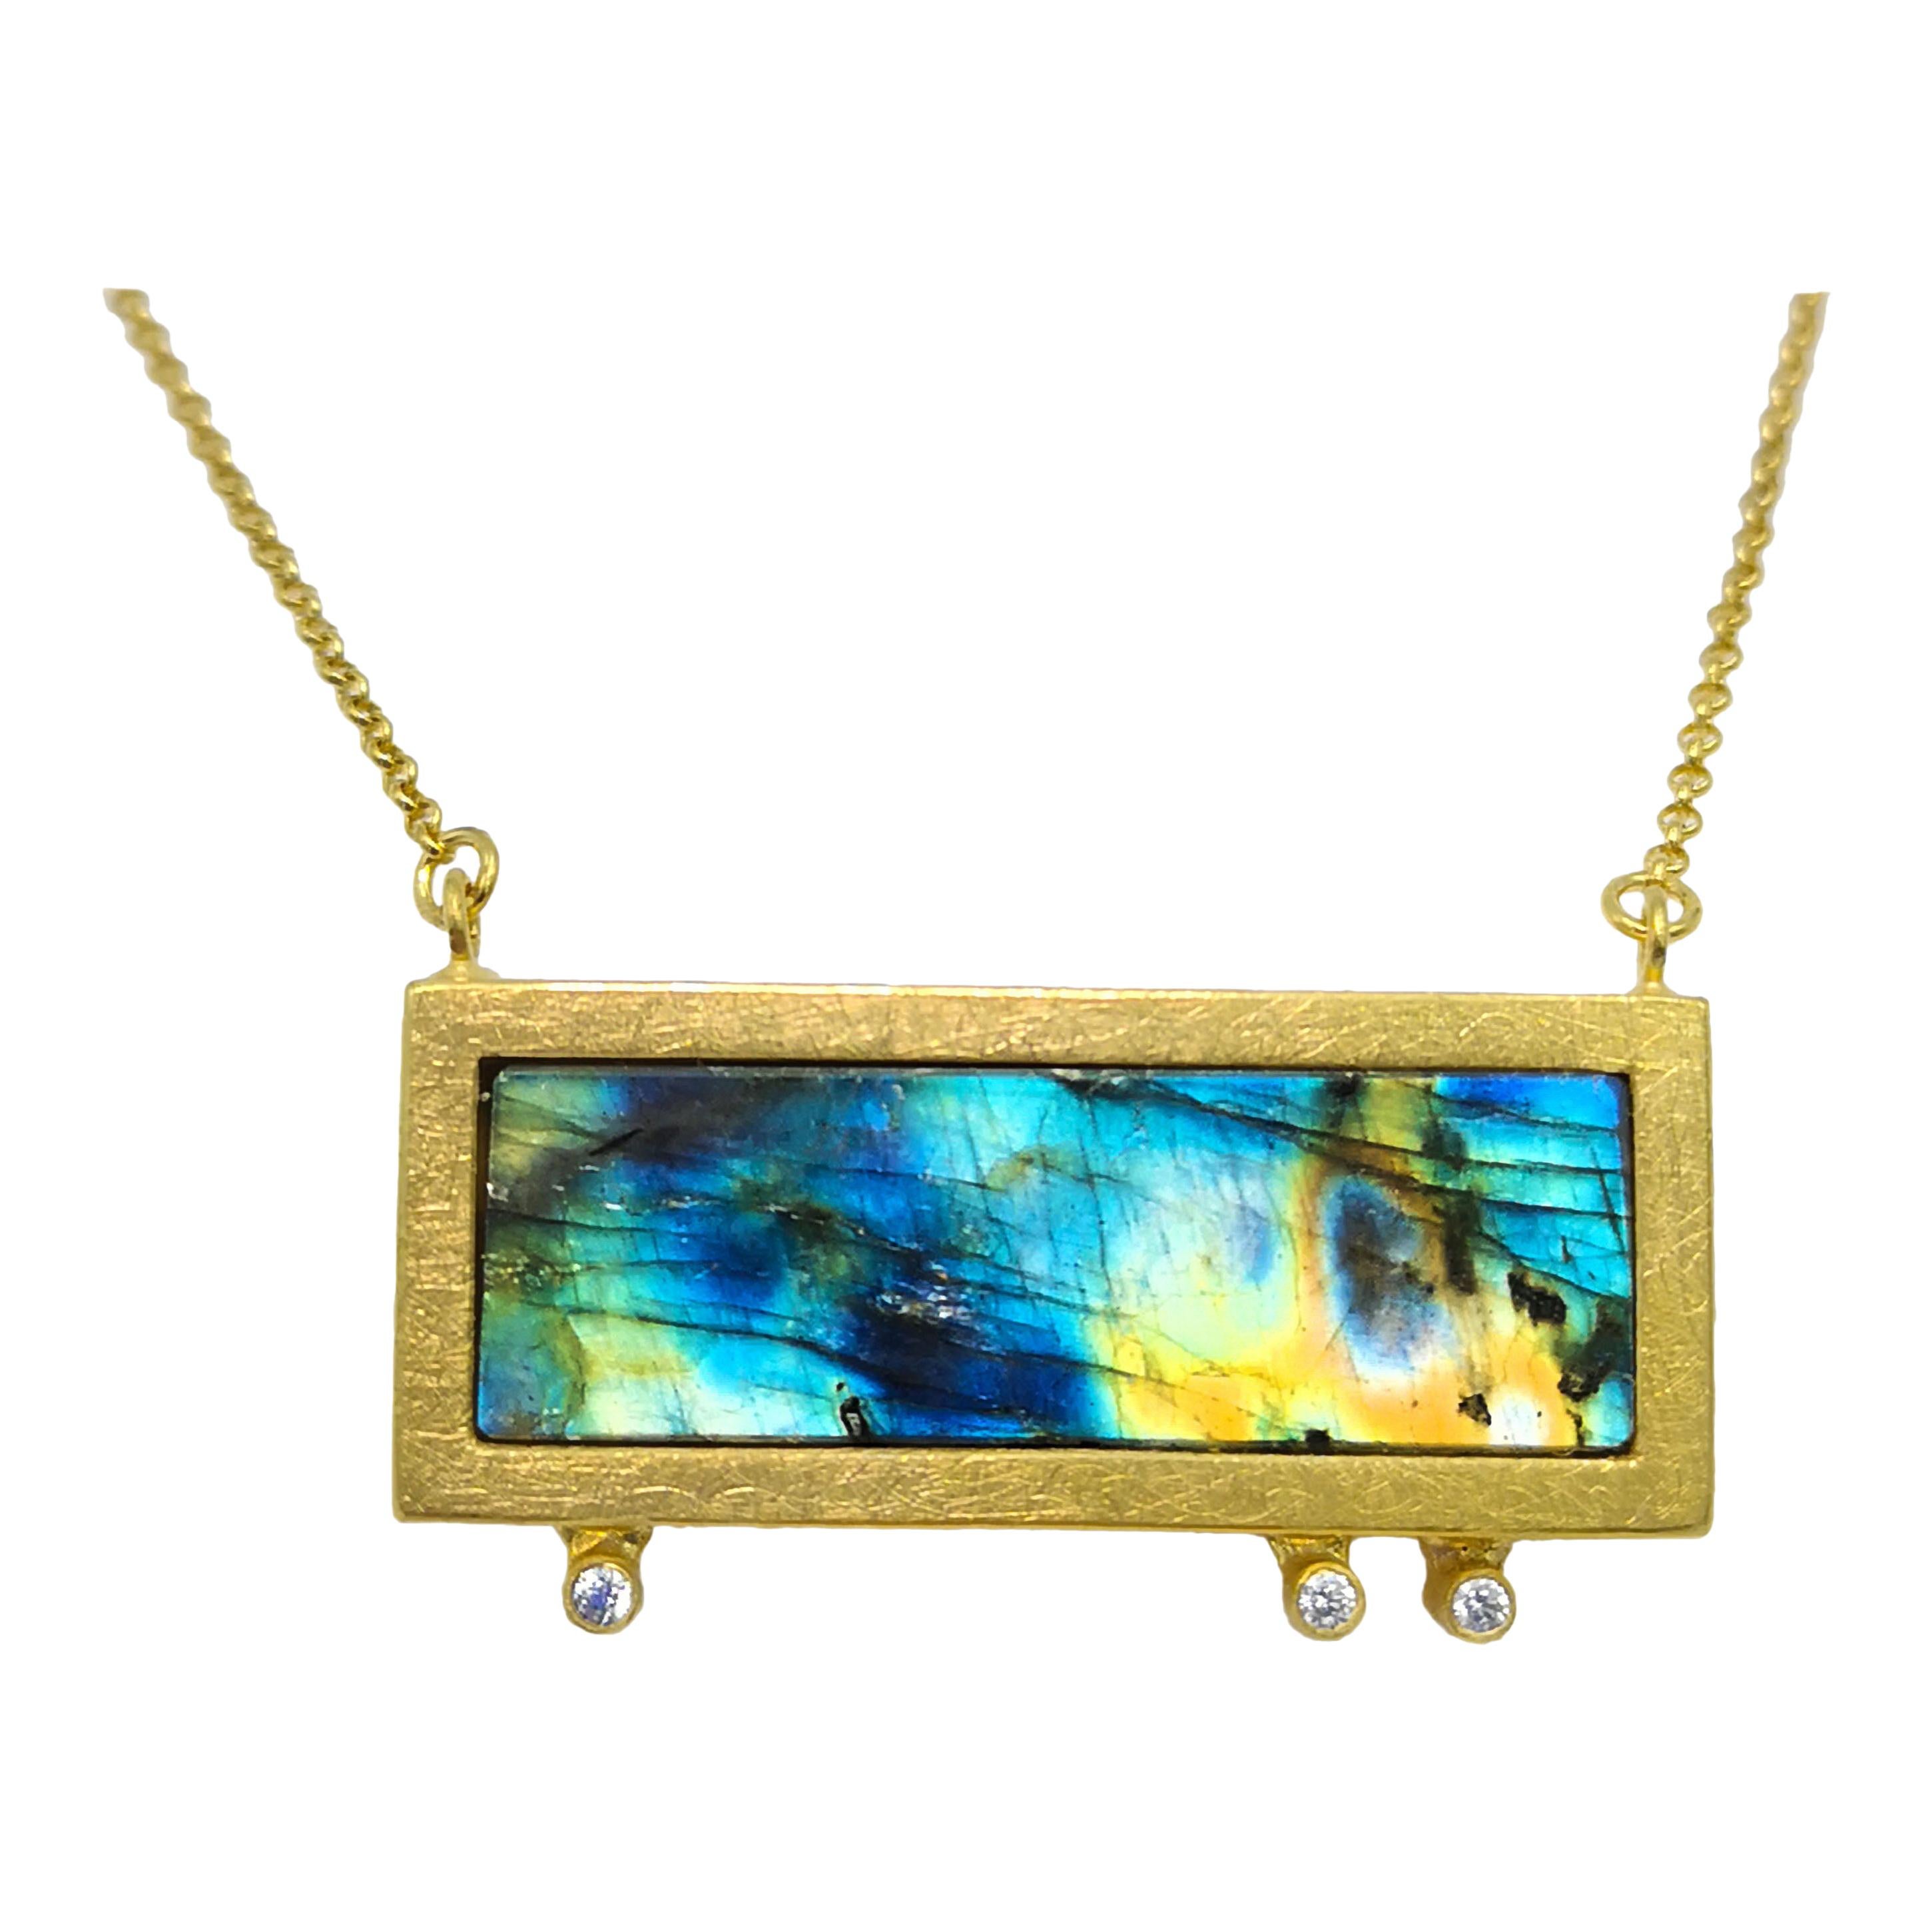 Sale 14K Gold-filled/Vermeil Framed Labradorite Stone pendant Necklace/Choker